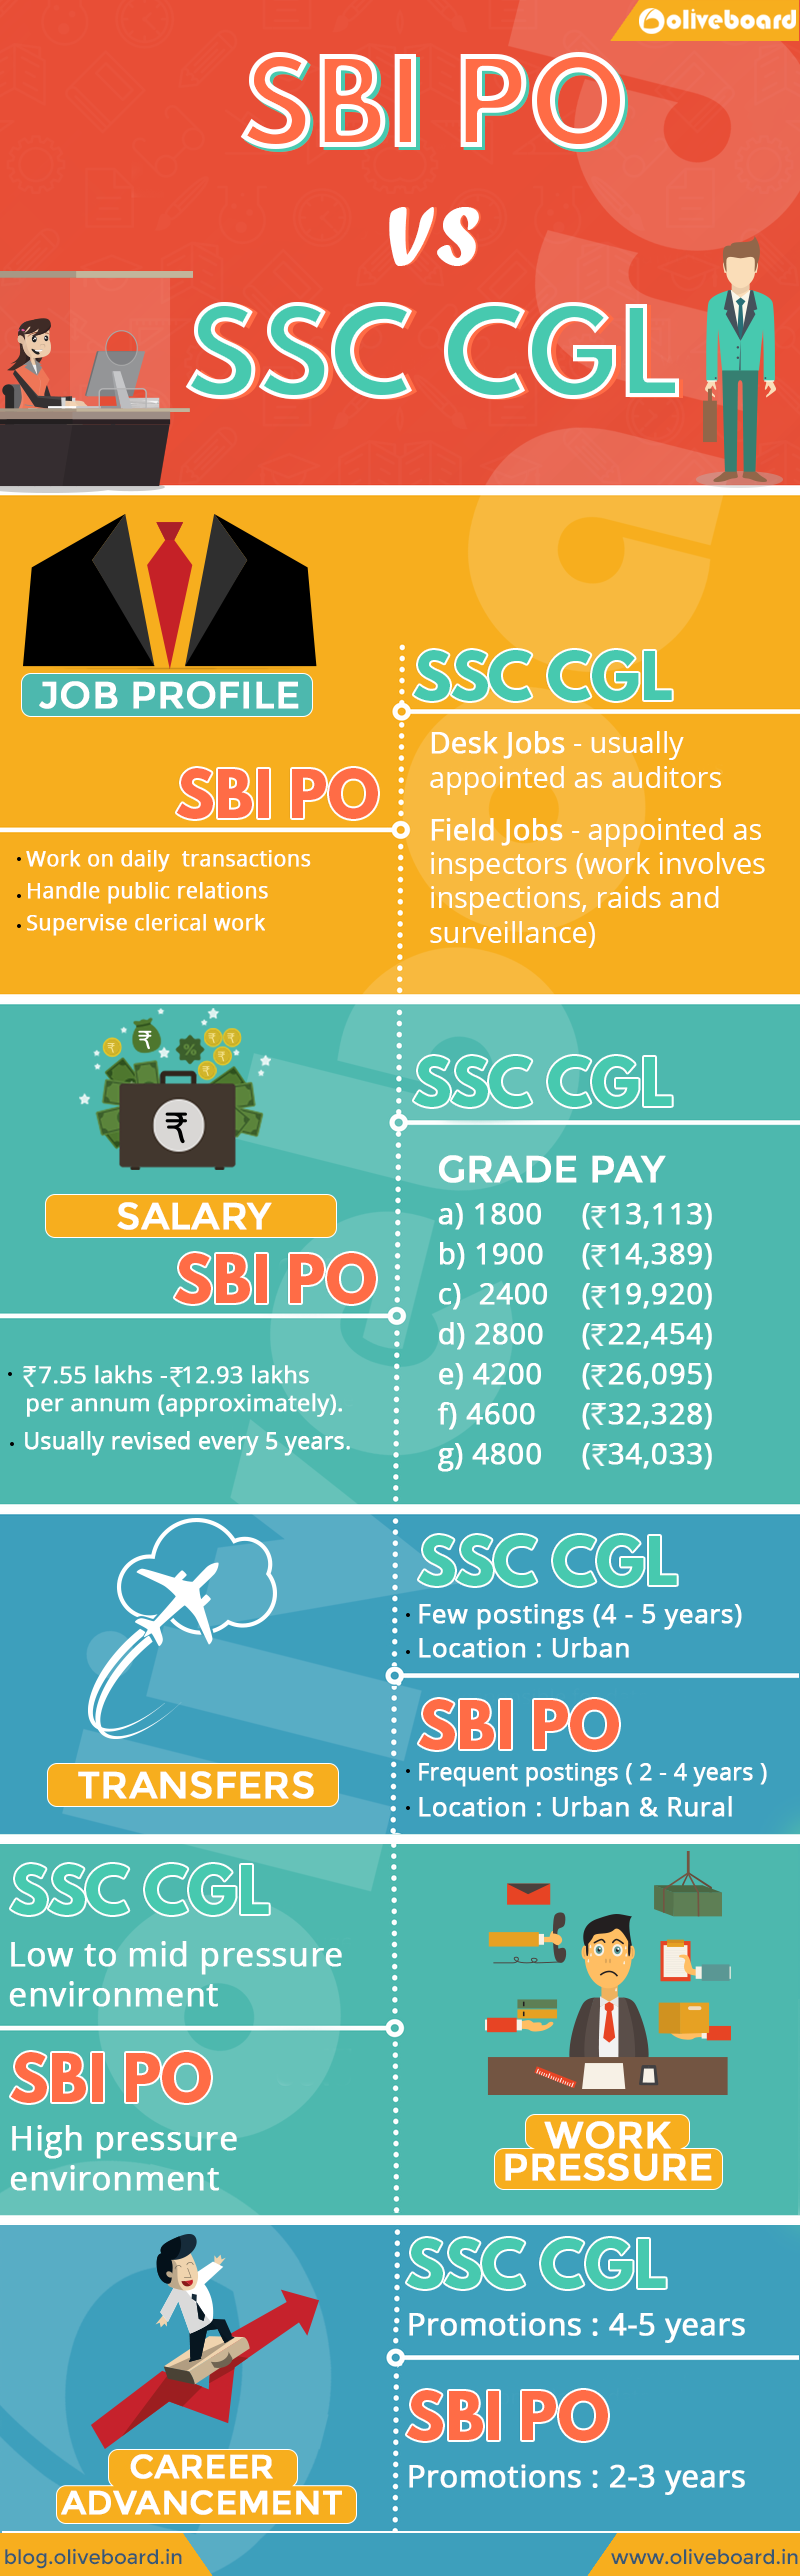 SBI PO v/s SSC CGL exam comparision salary job profile career growth perks promotion career advancement bank job government job work pressure